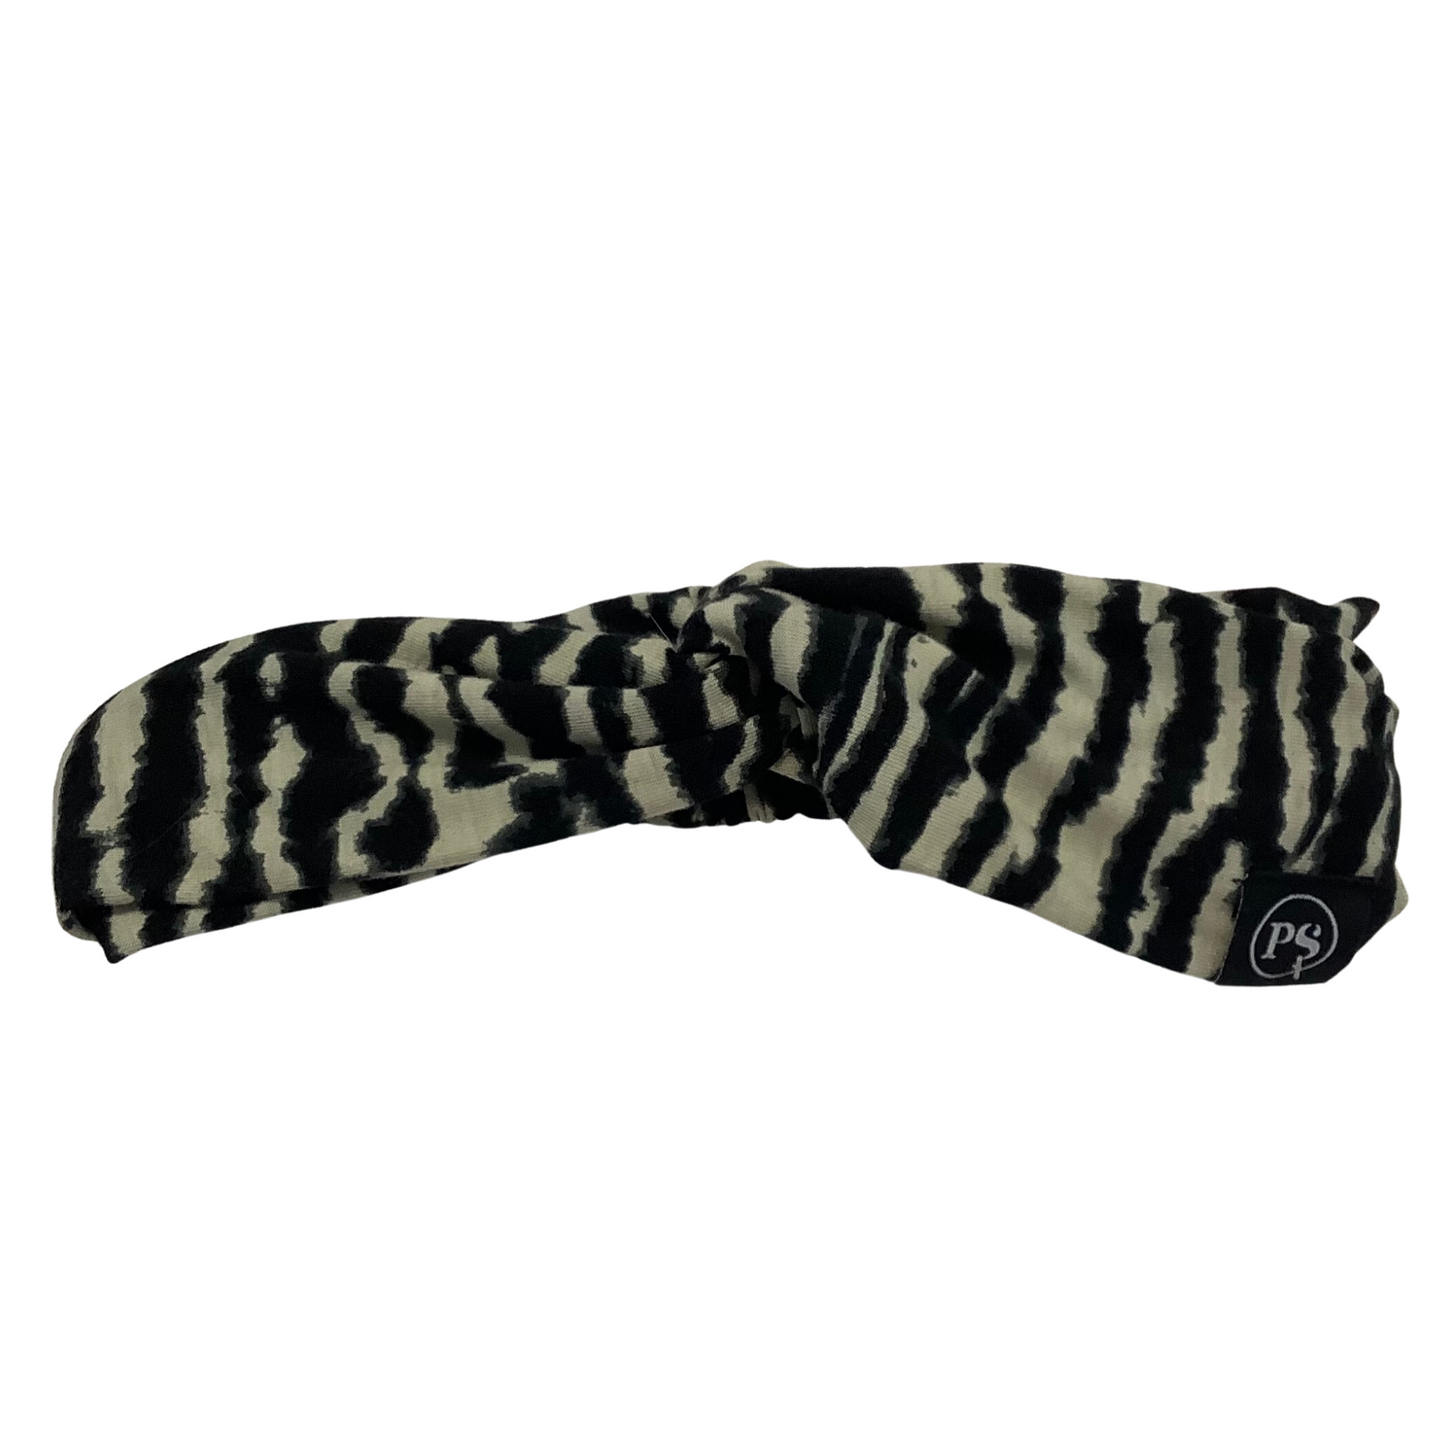 Women's headband in zebra stripe print